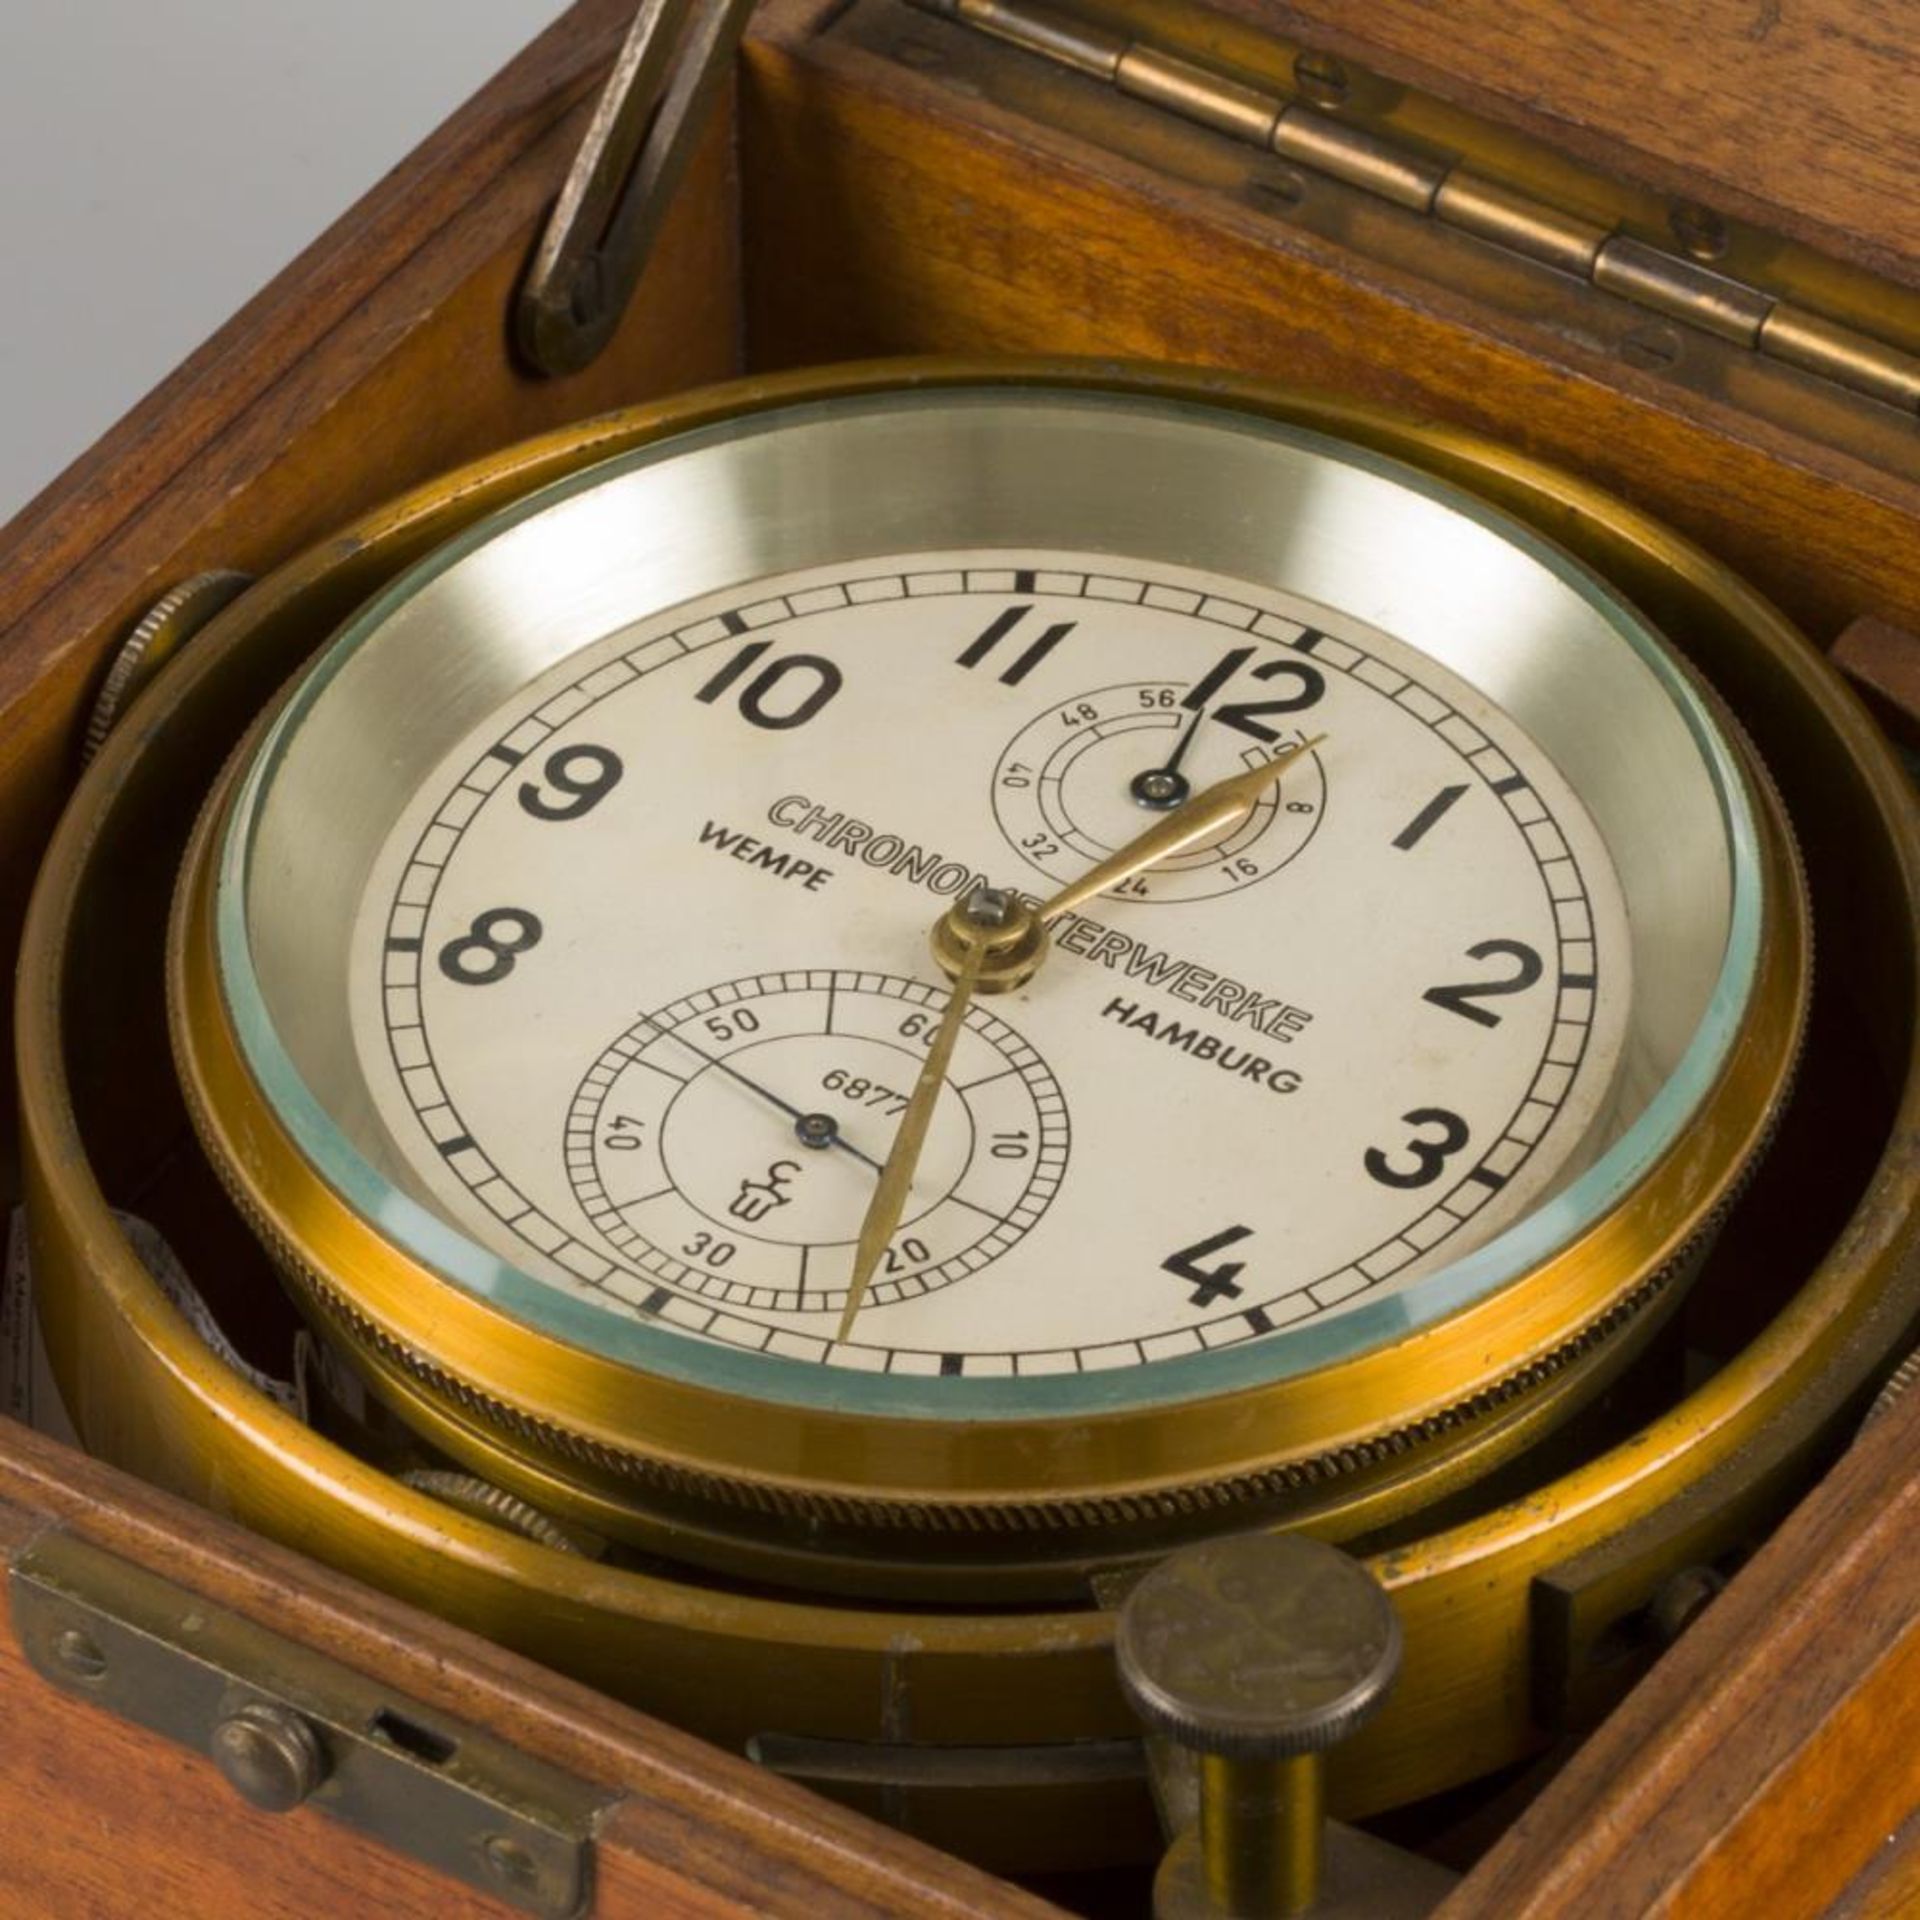 A "Wempe Chronometer Werke" chronometer, Duitsland, mid. 20e eeuw. - Image 2 of 3